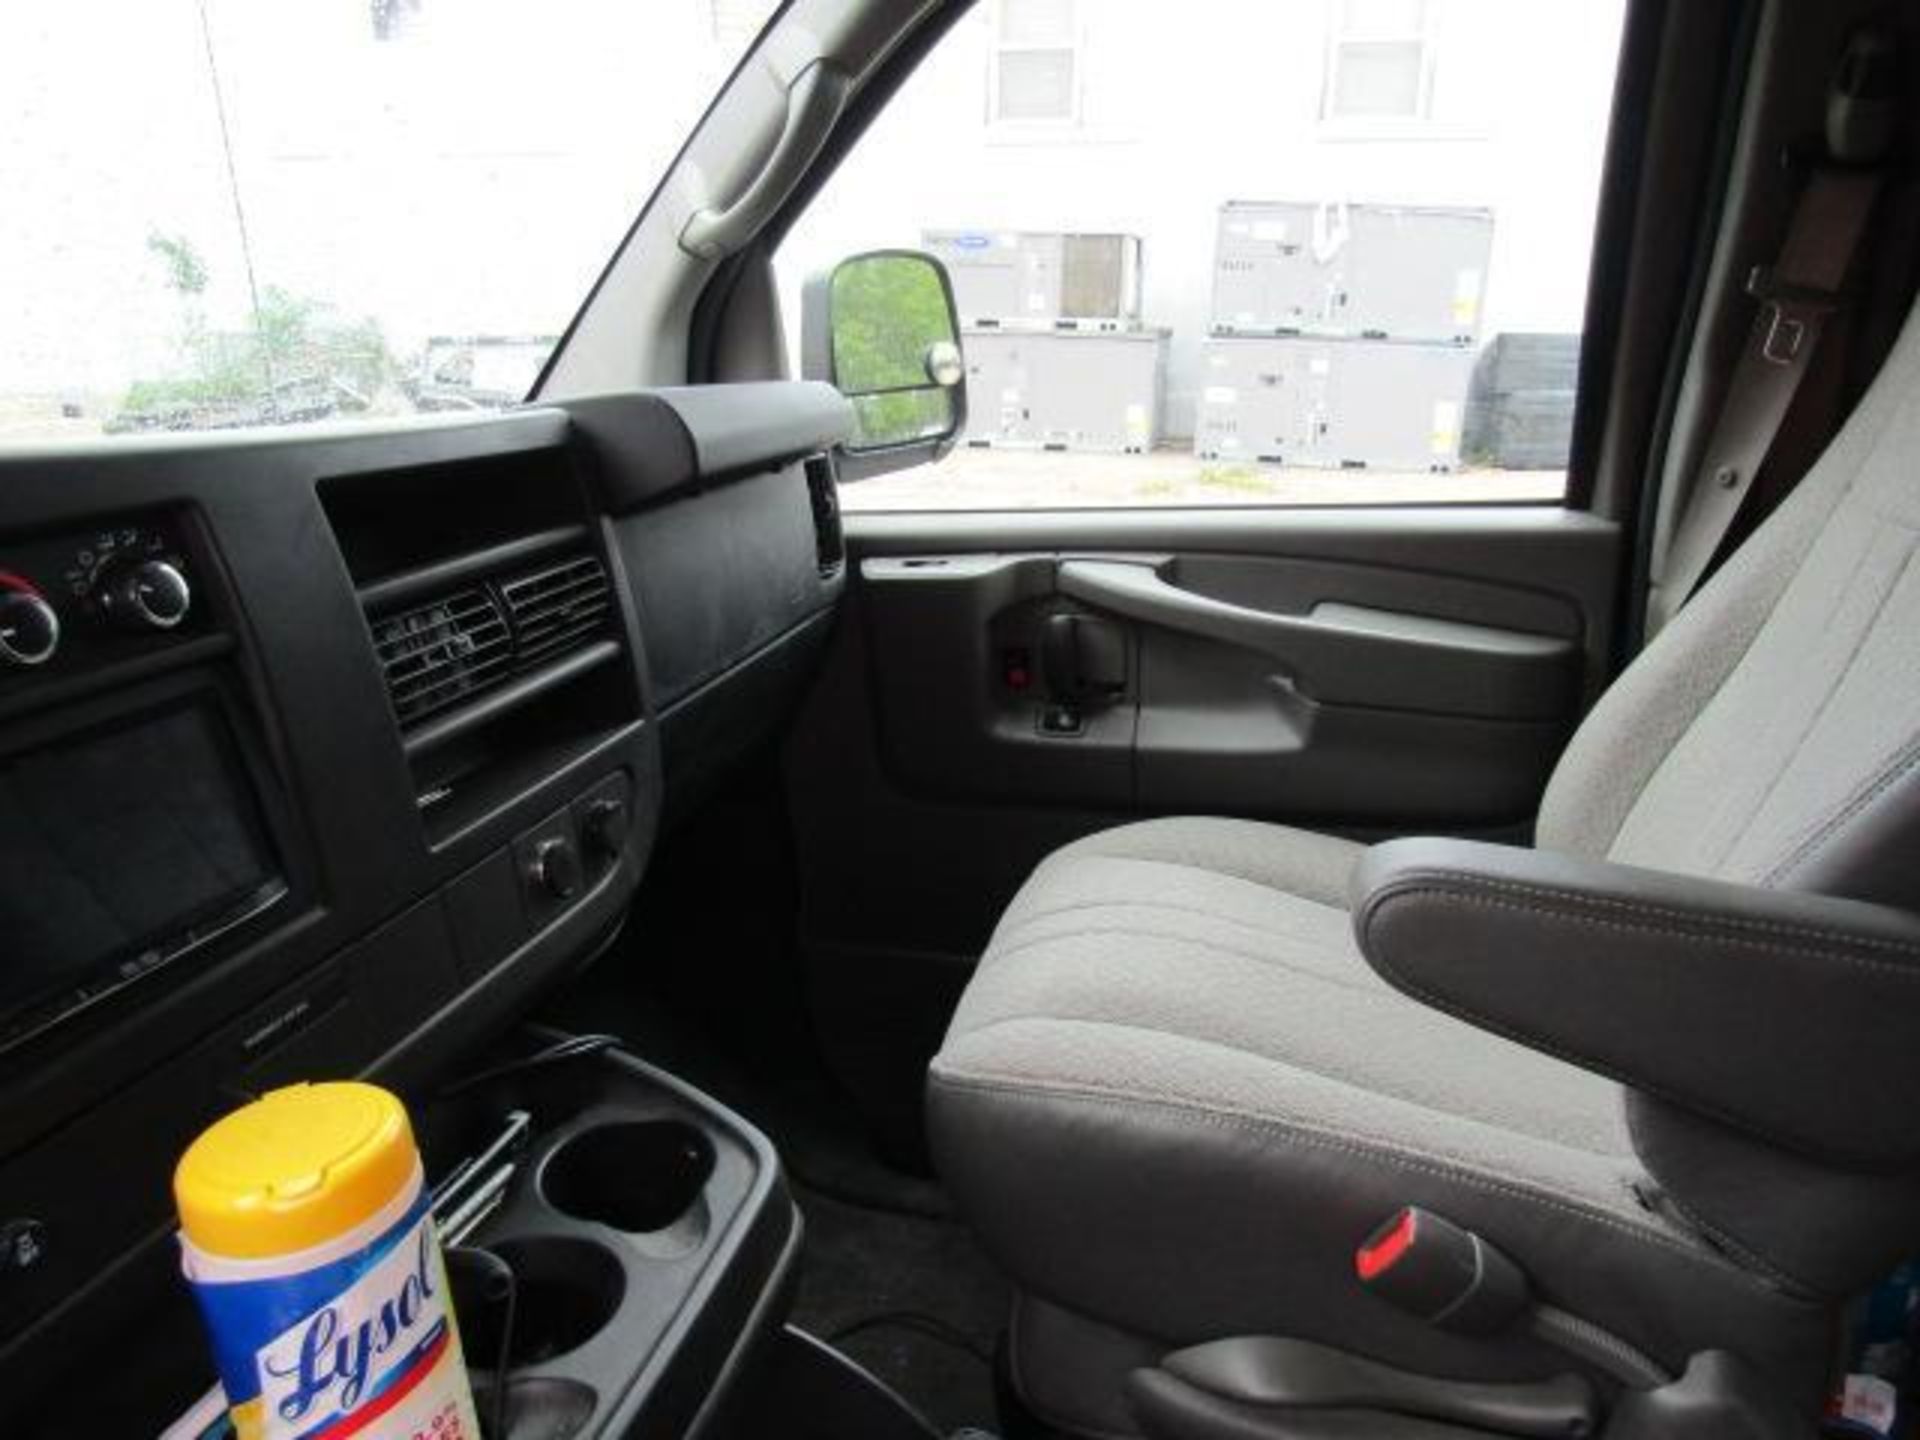 2014 Chevrolet Express Van Model G13405, VIN 1GCSGAFX1E1134256, Rubber Mats, Front Seat Partition to - Image 9 of 14